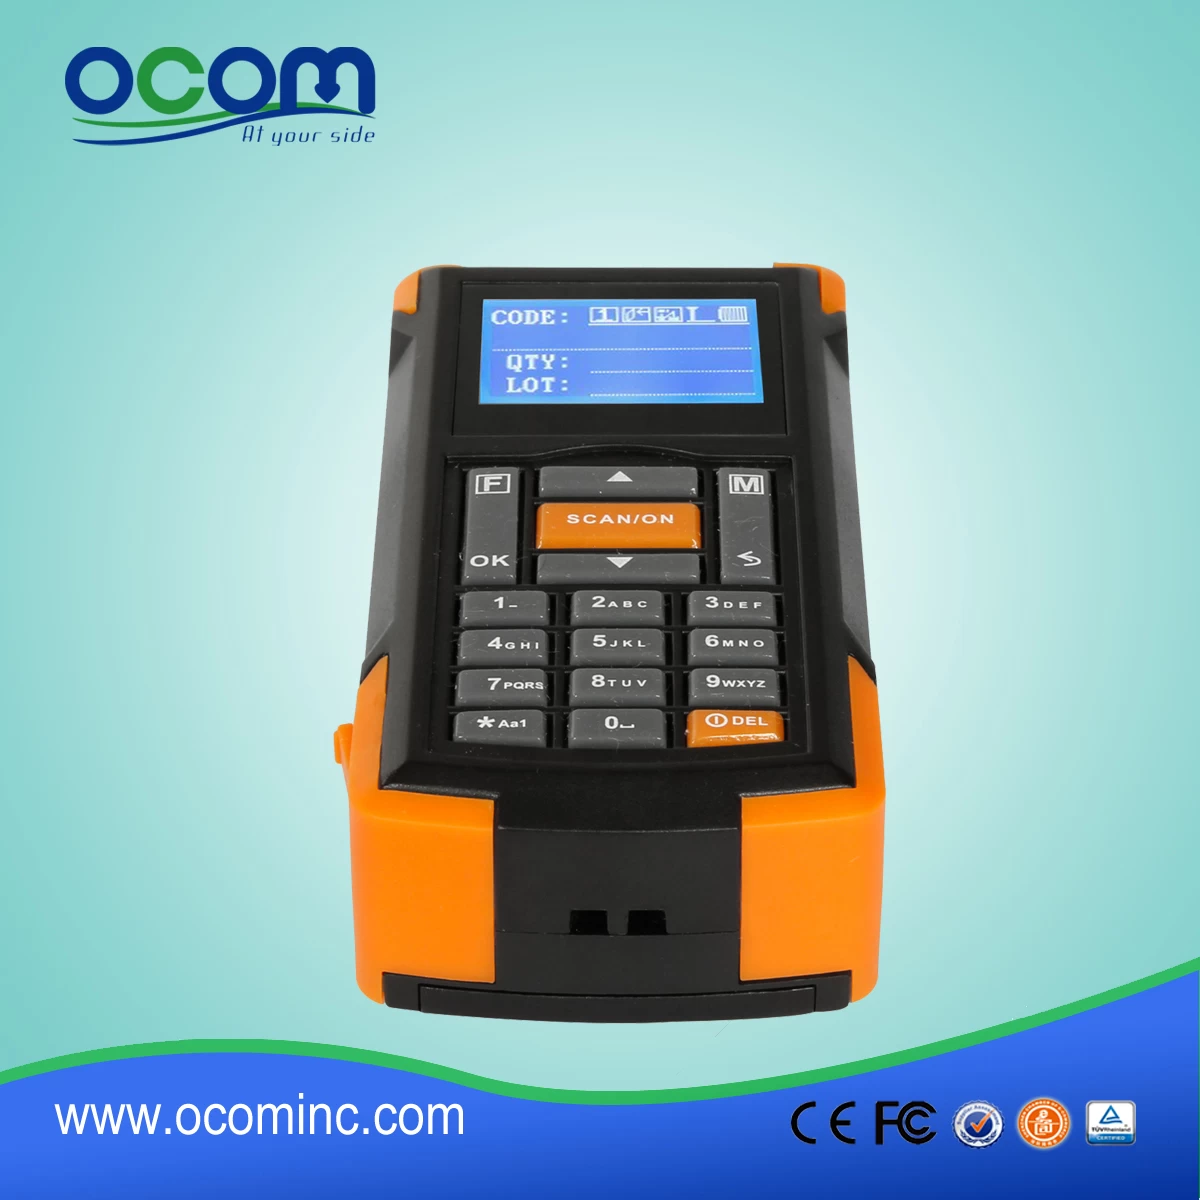 (OCBS-D004) Wireless Mini Handheld Stocktaking Terminal